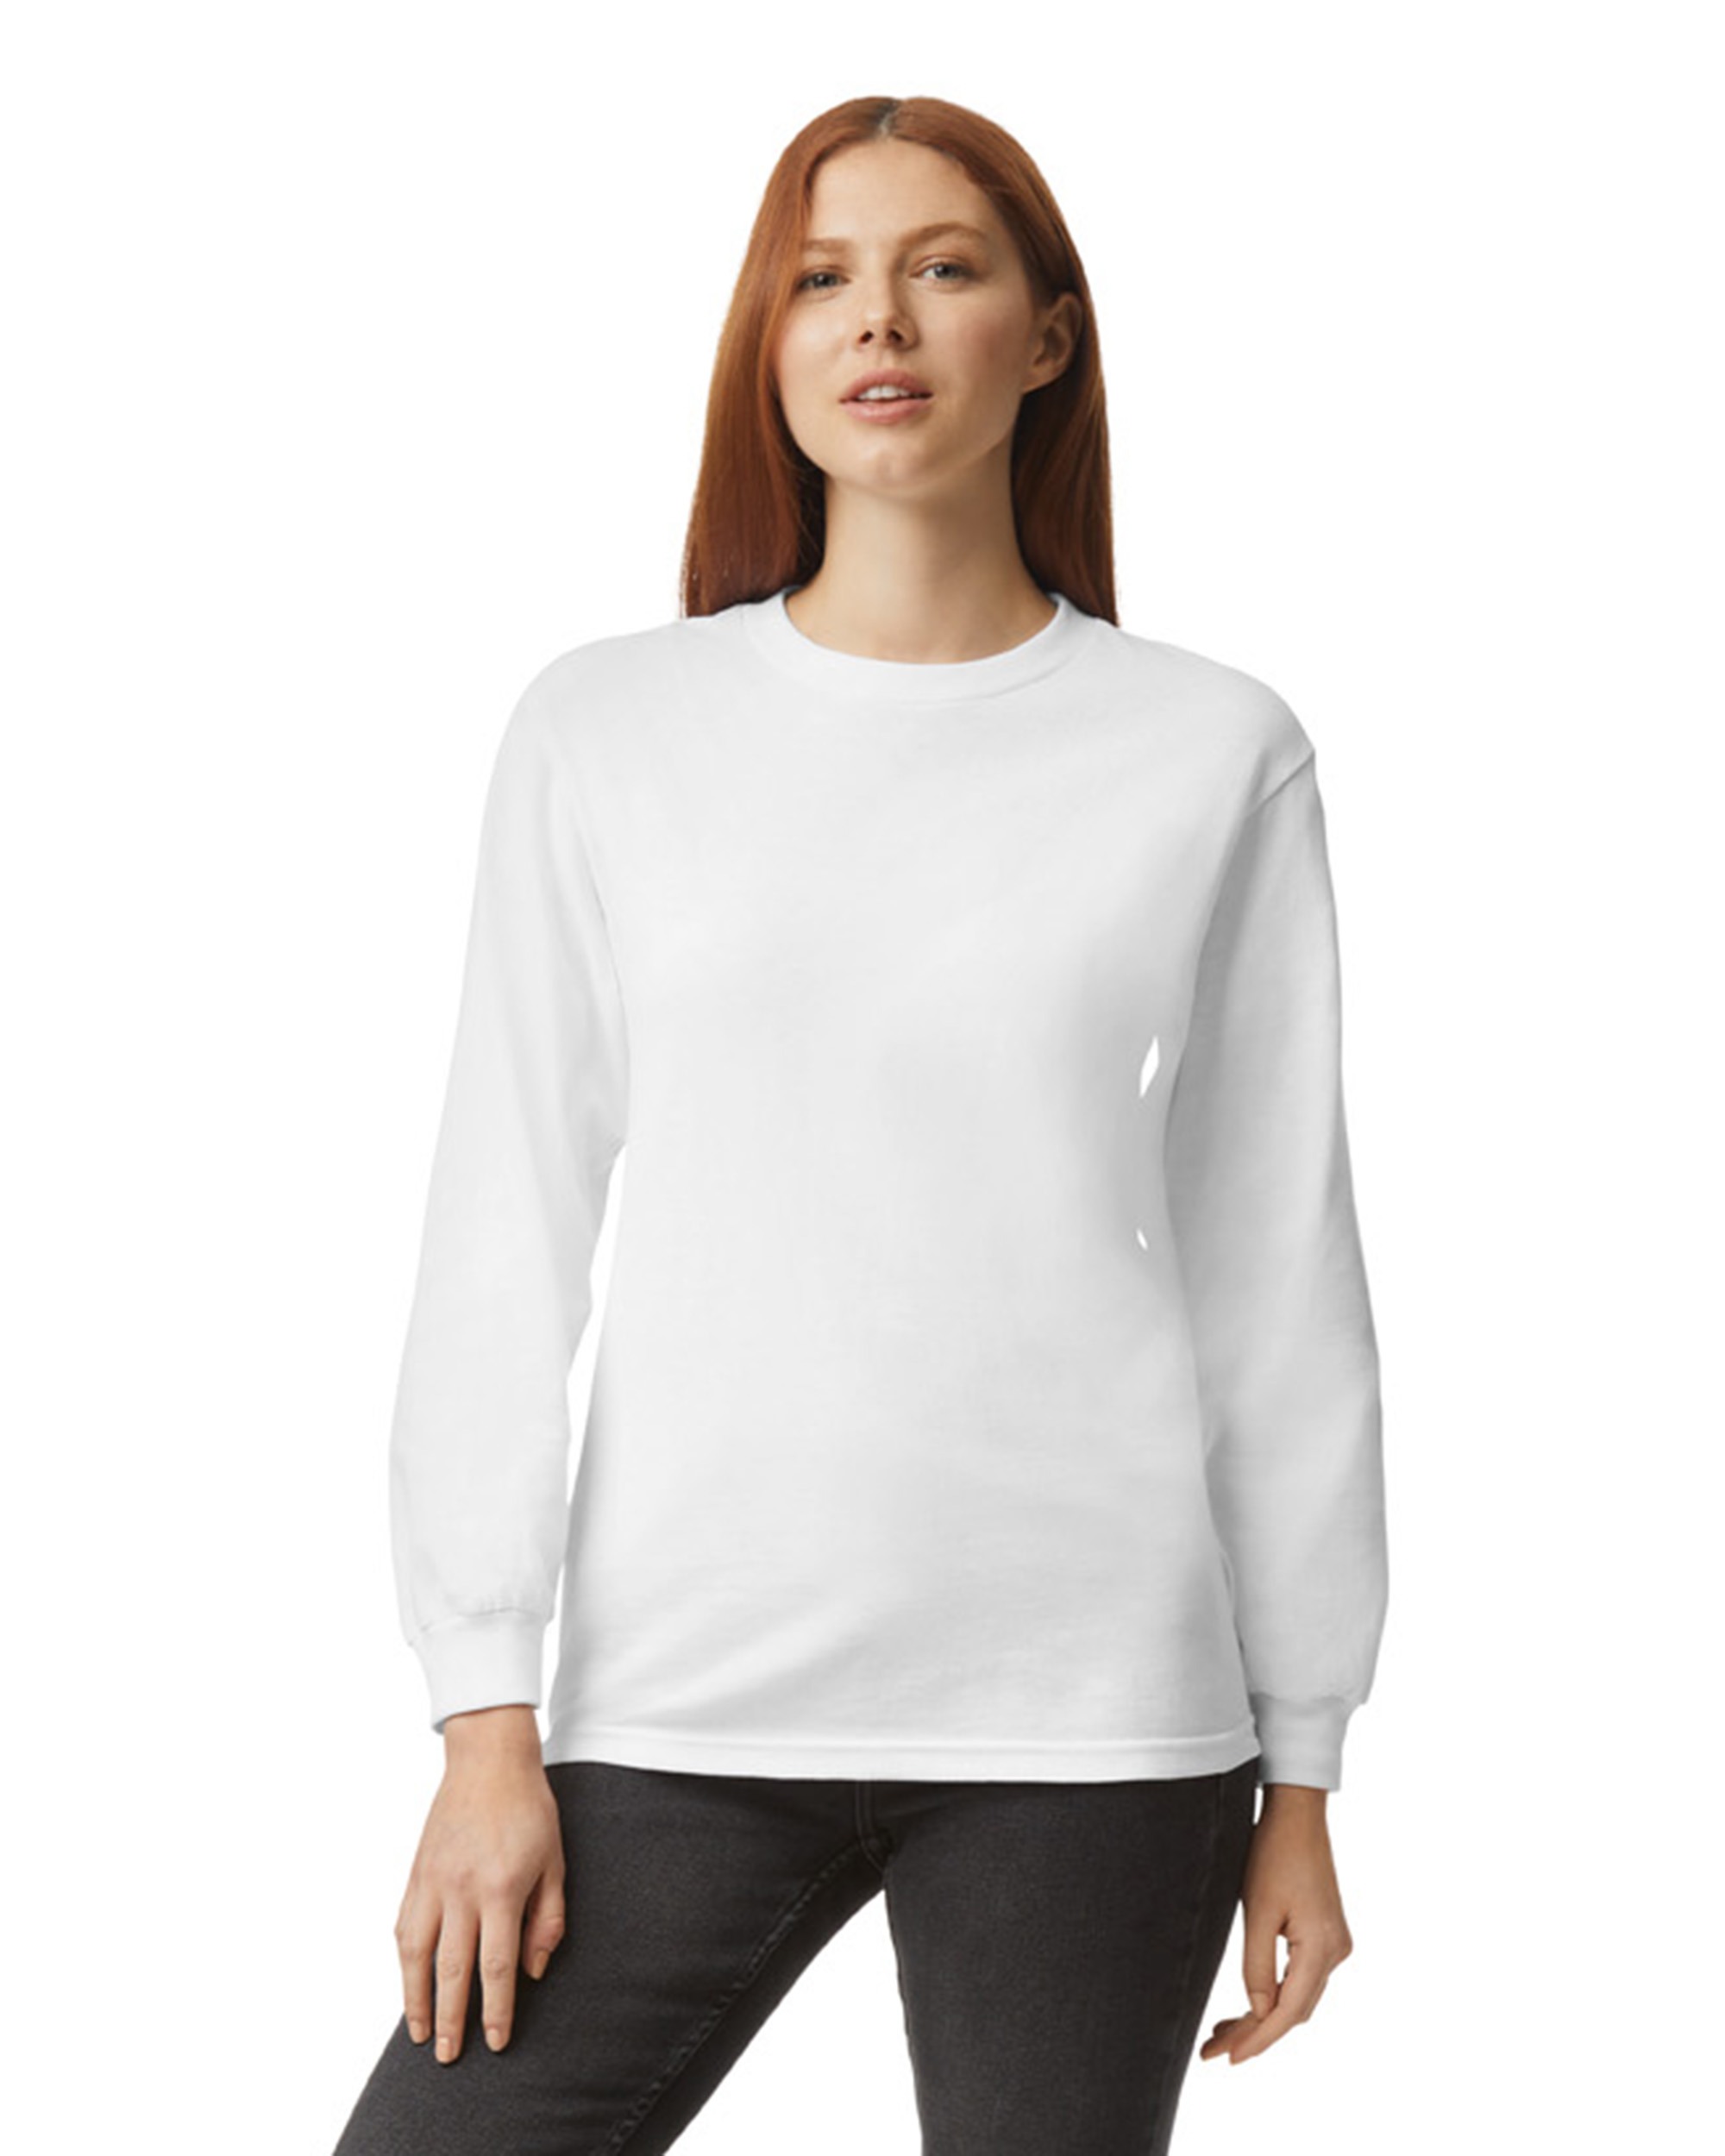 American Apparel® 1304 Heavyweight Cotton Unisex Long Sleeve T-Shirt